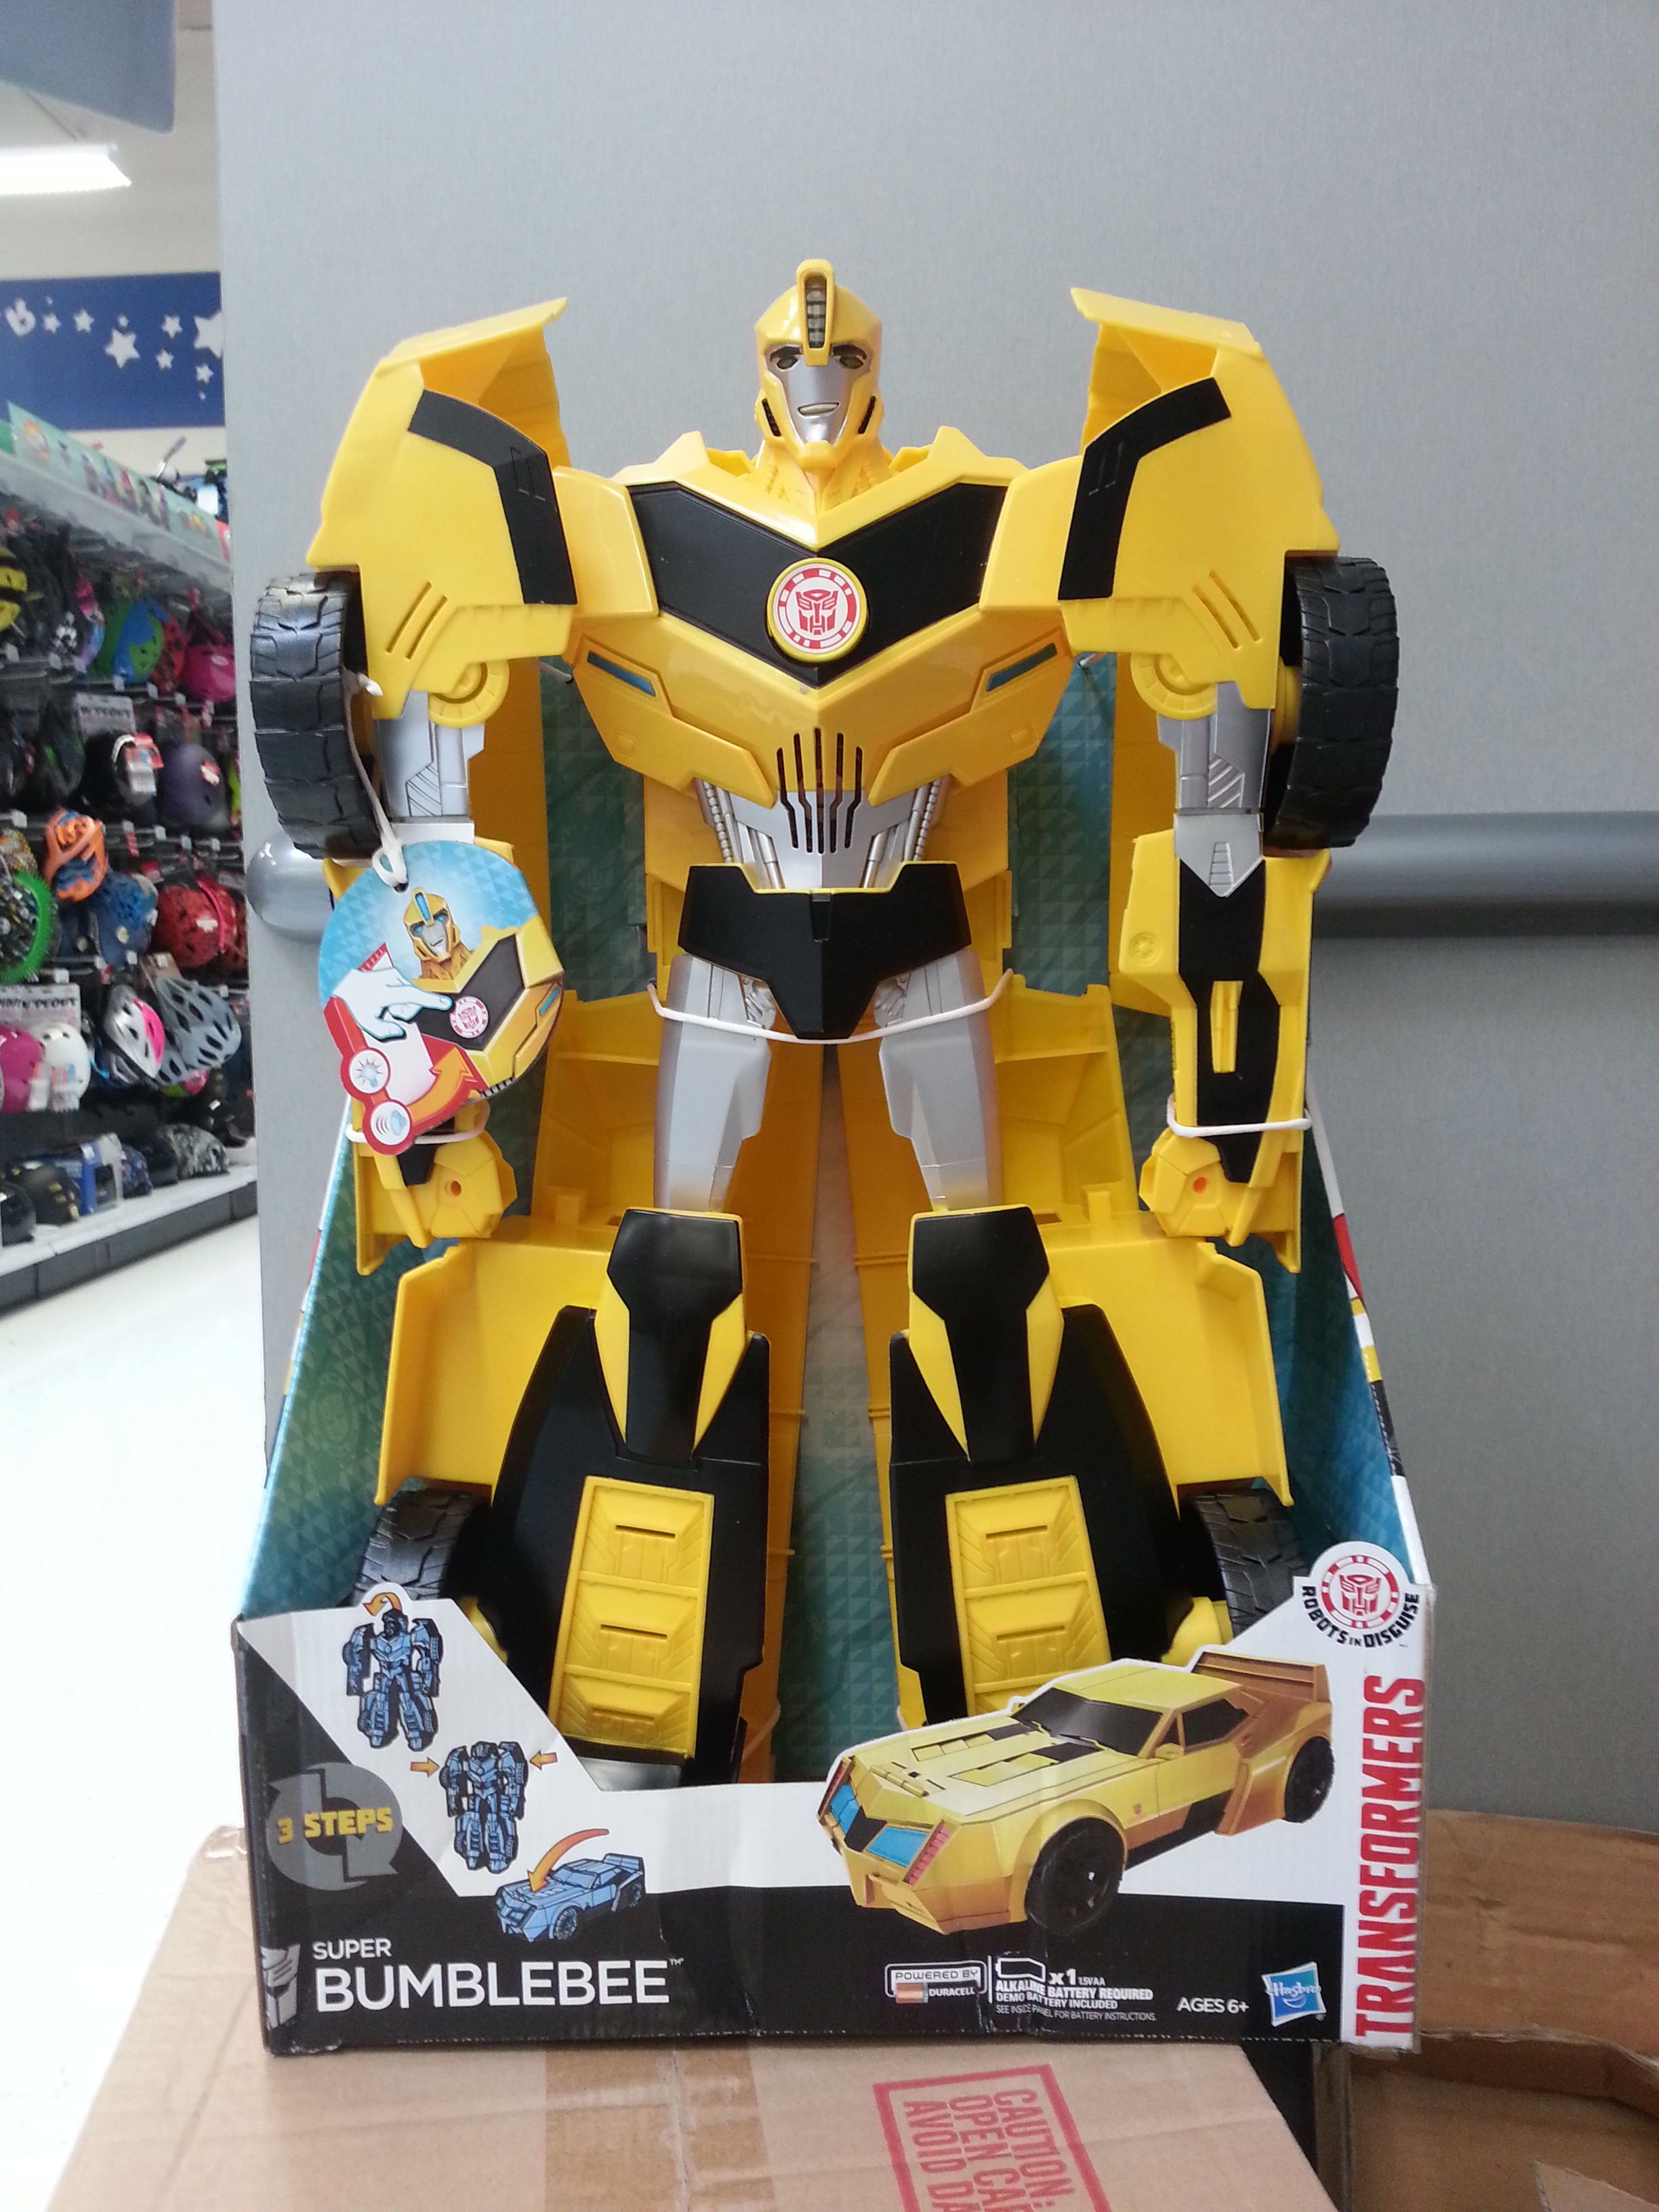 hasbro transformers super bumblebee figure